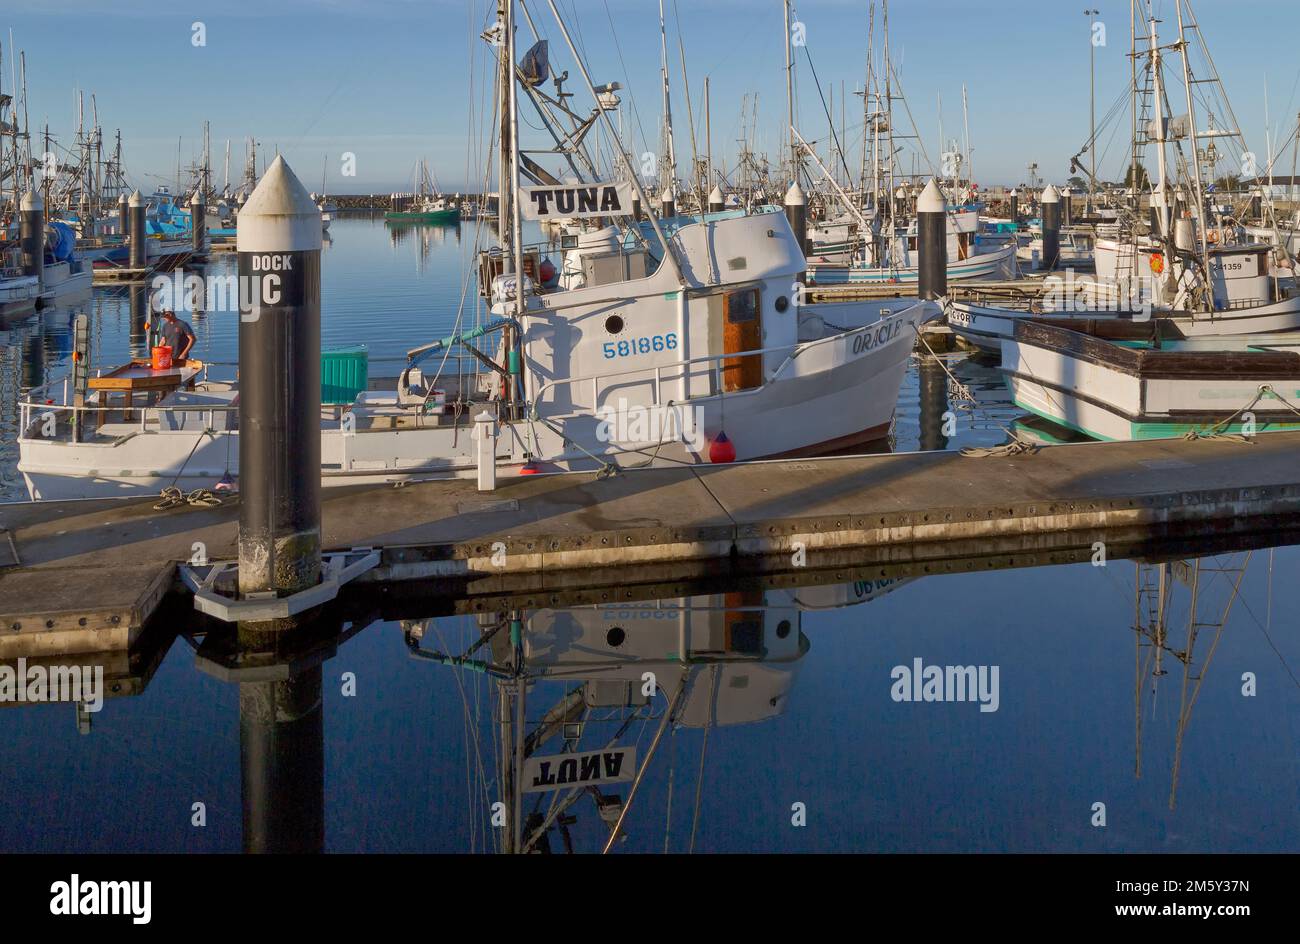 Fishing boats moored in Crescent City Harbor, Oracle dock 'C', fisherman promoting 'Tuna' for sale 'Thunnus alalunga', Albacore Tuna. Stock Photo